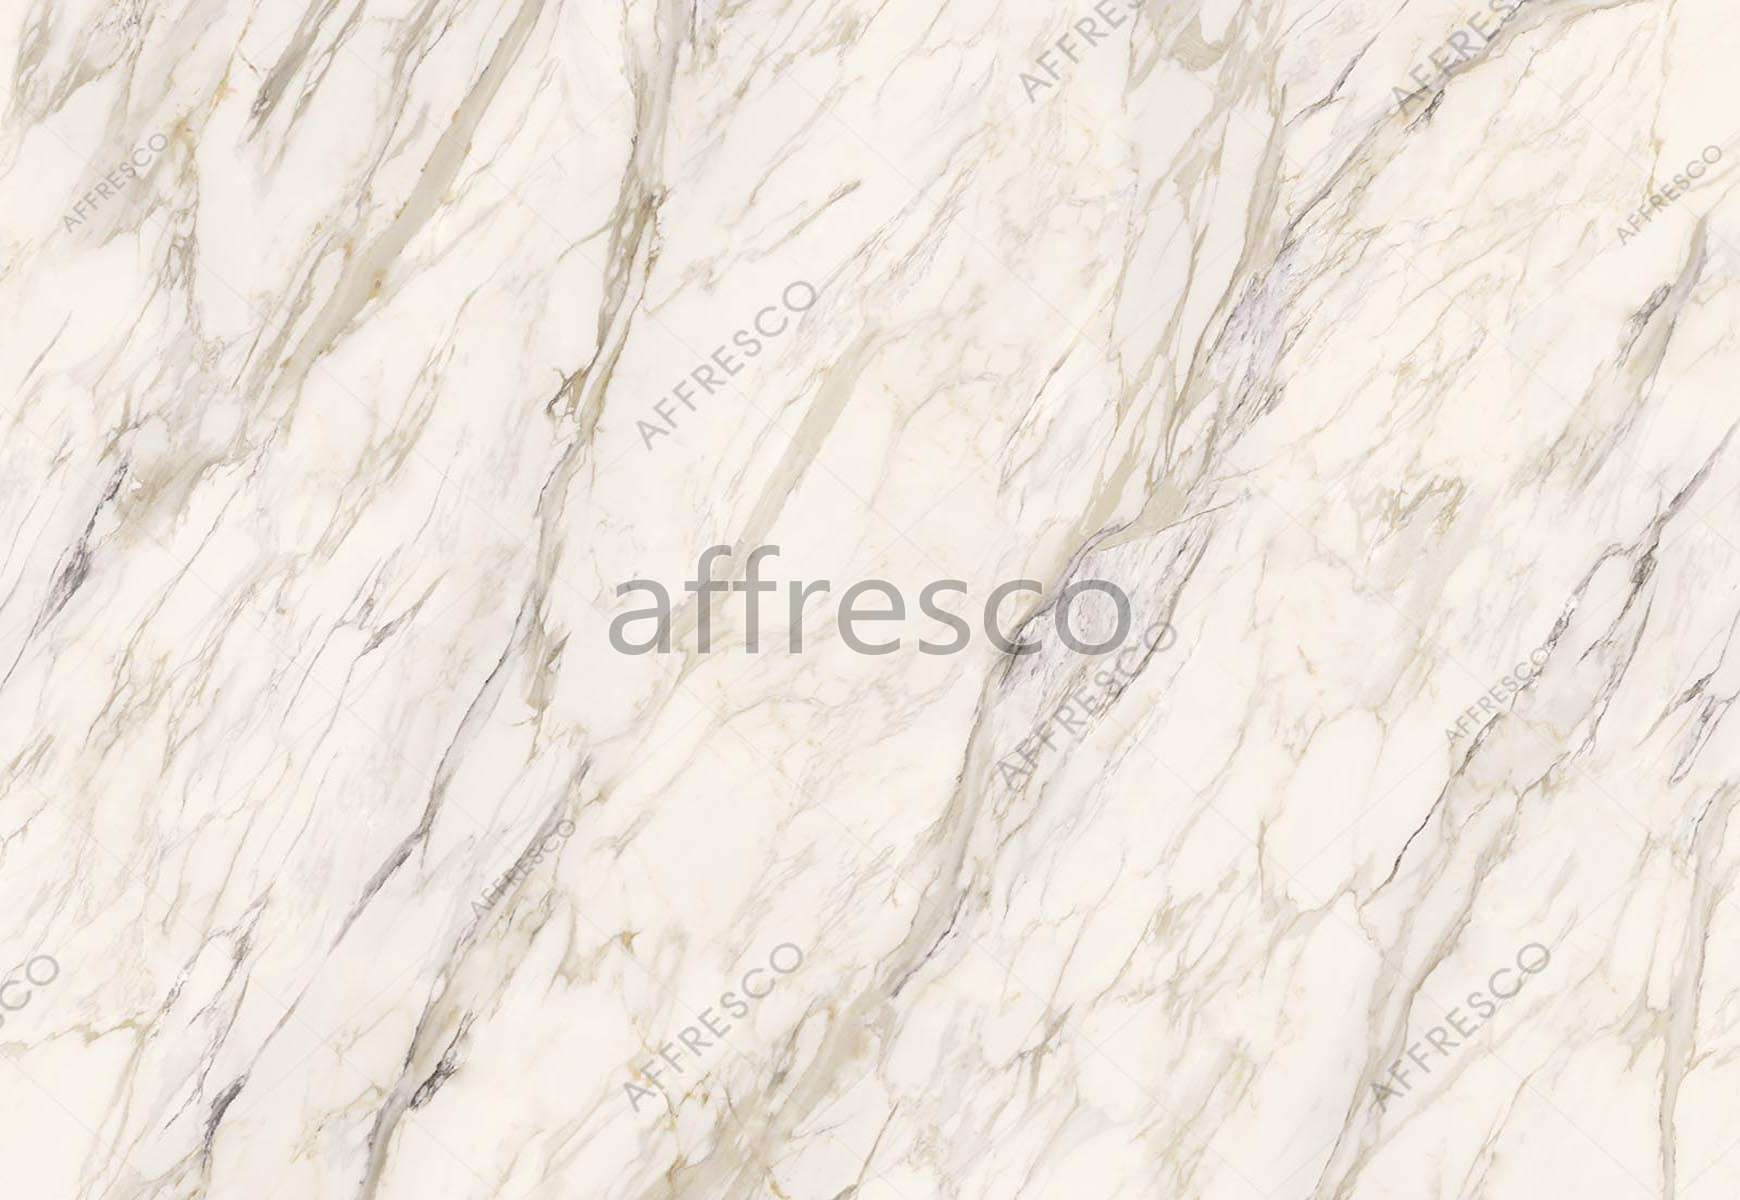 ID139068 | Fluid | marble imitation | Affresco Factory